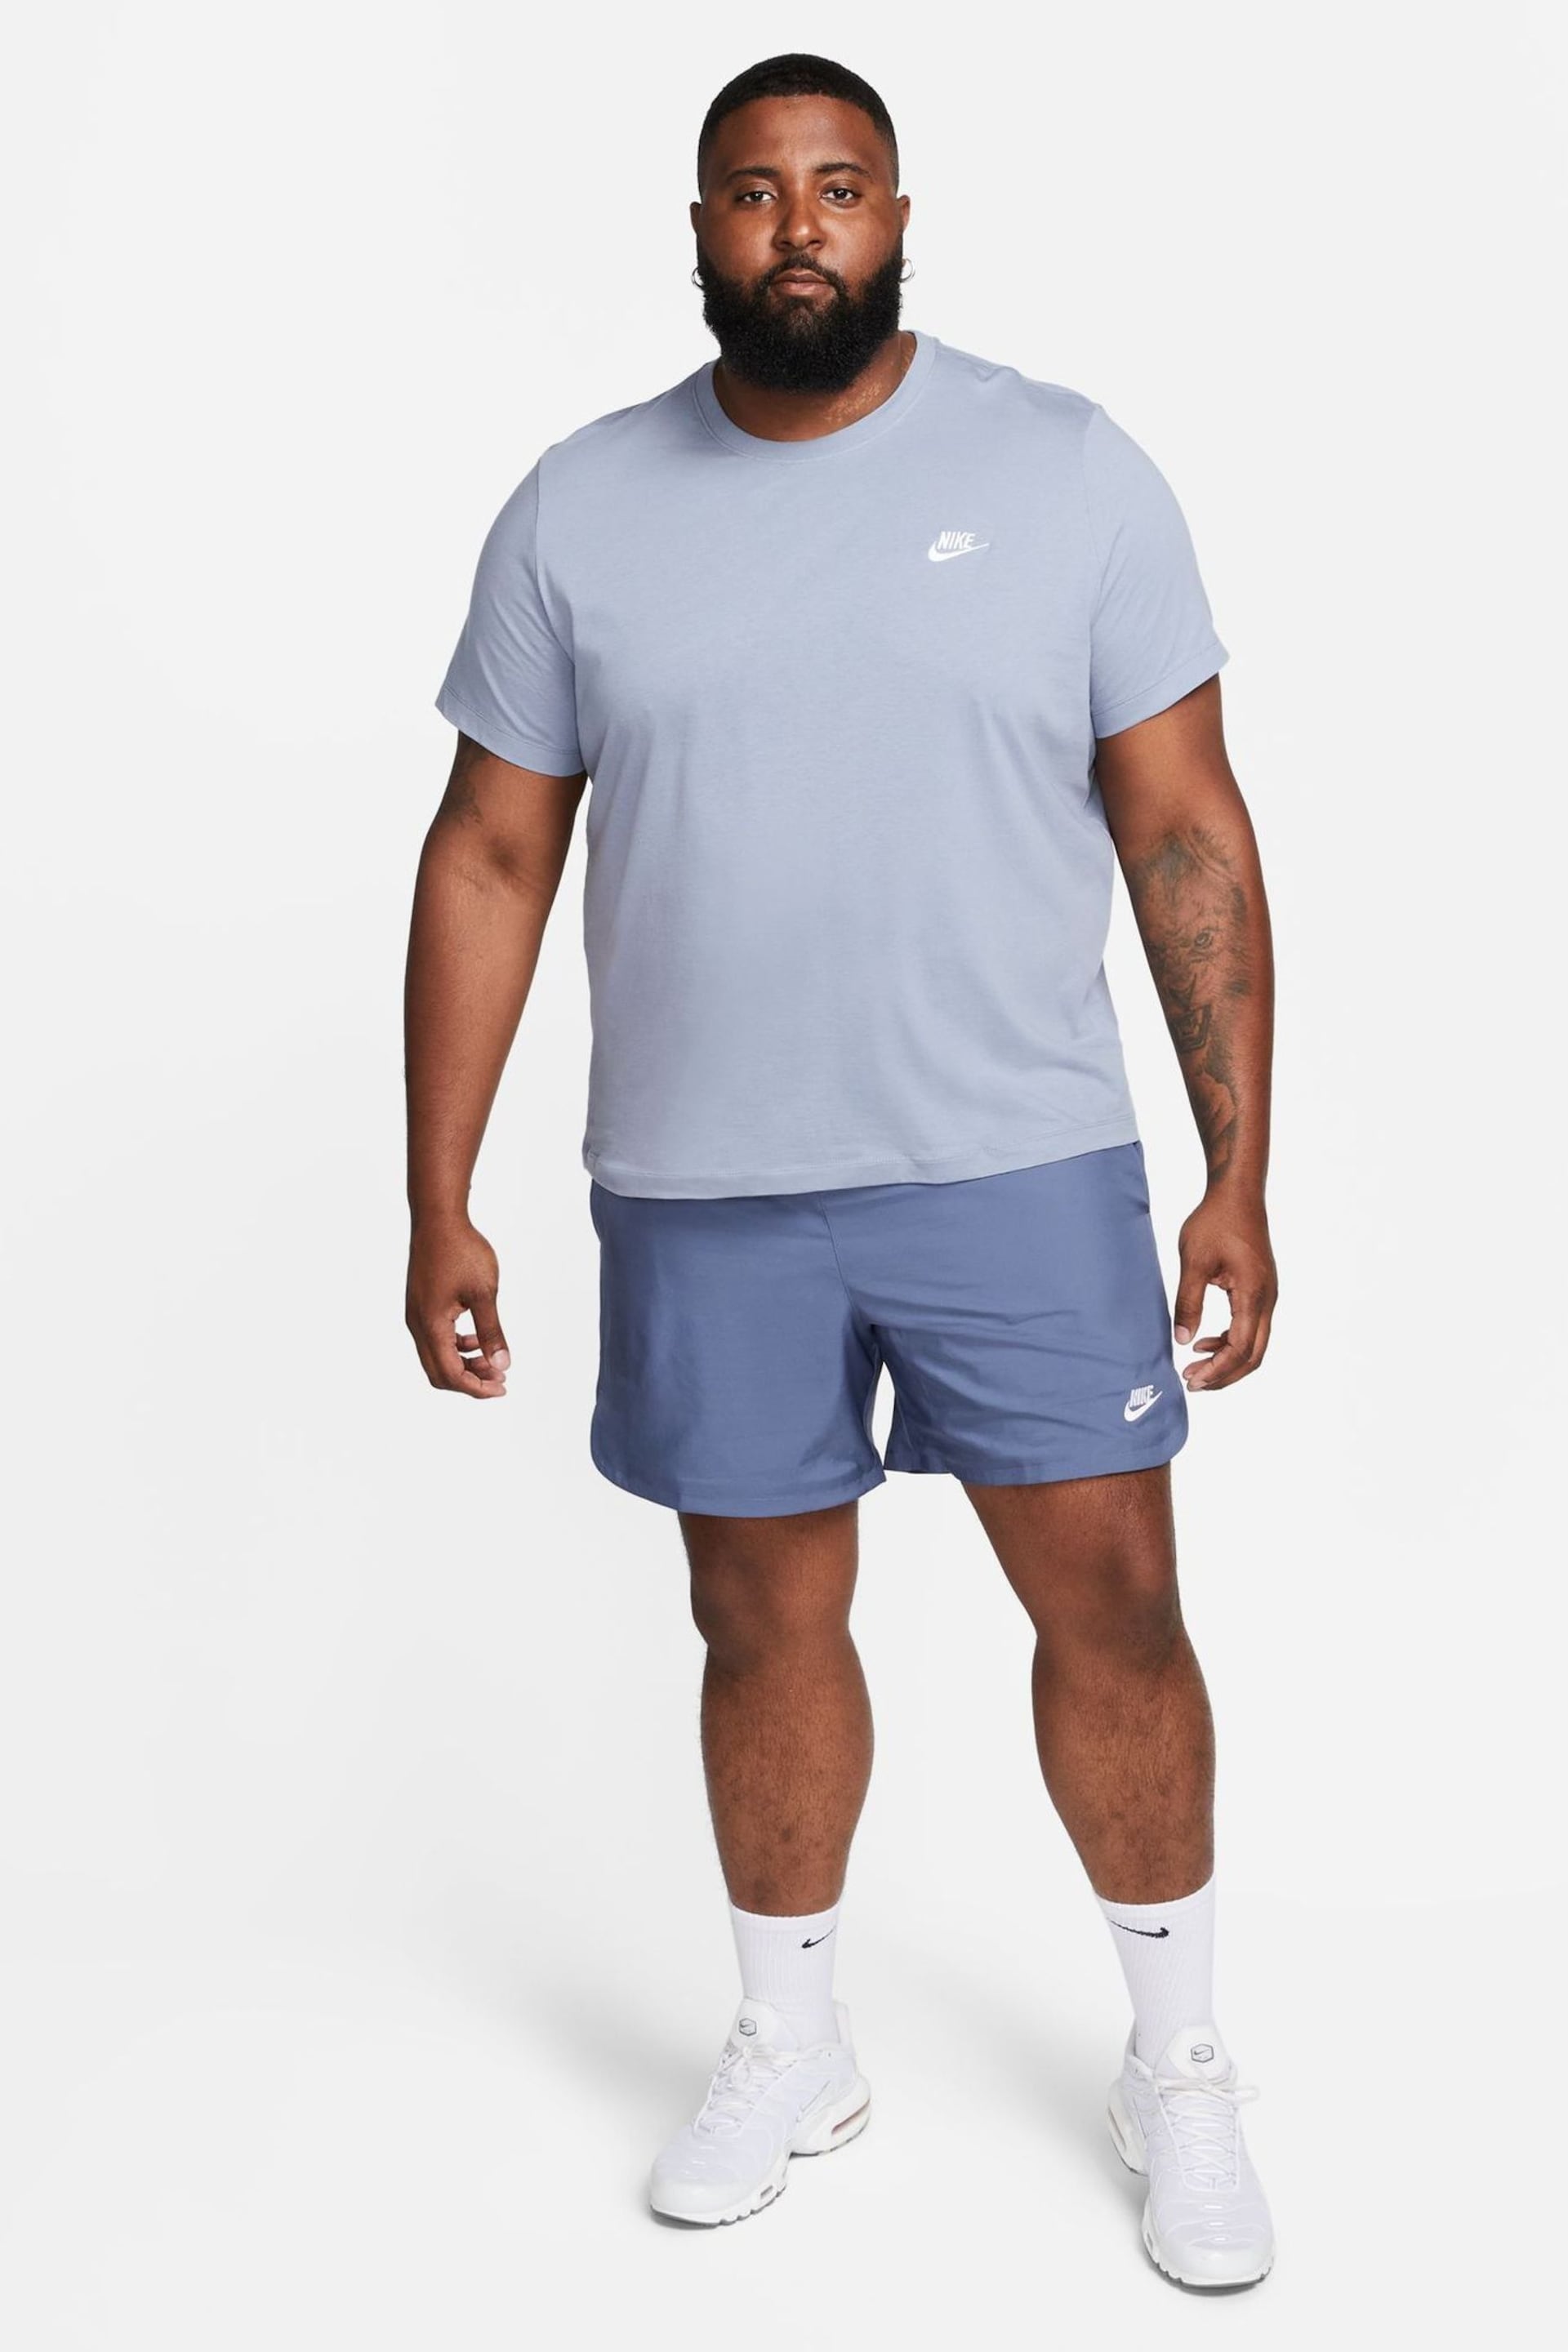 Nike Slate Grey Club T-Shirt - Image 8 of 9